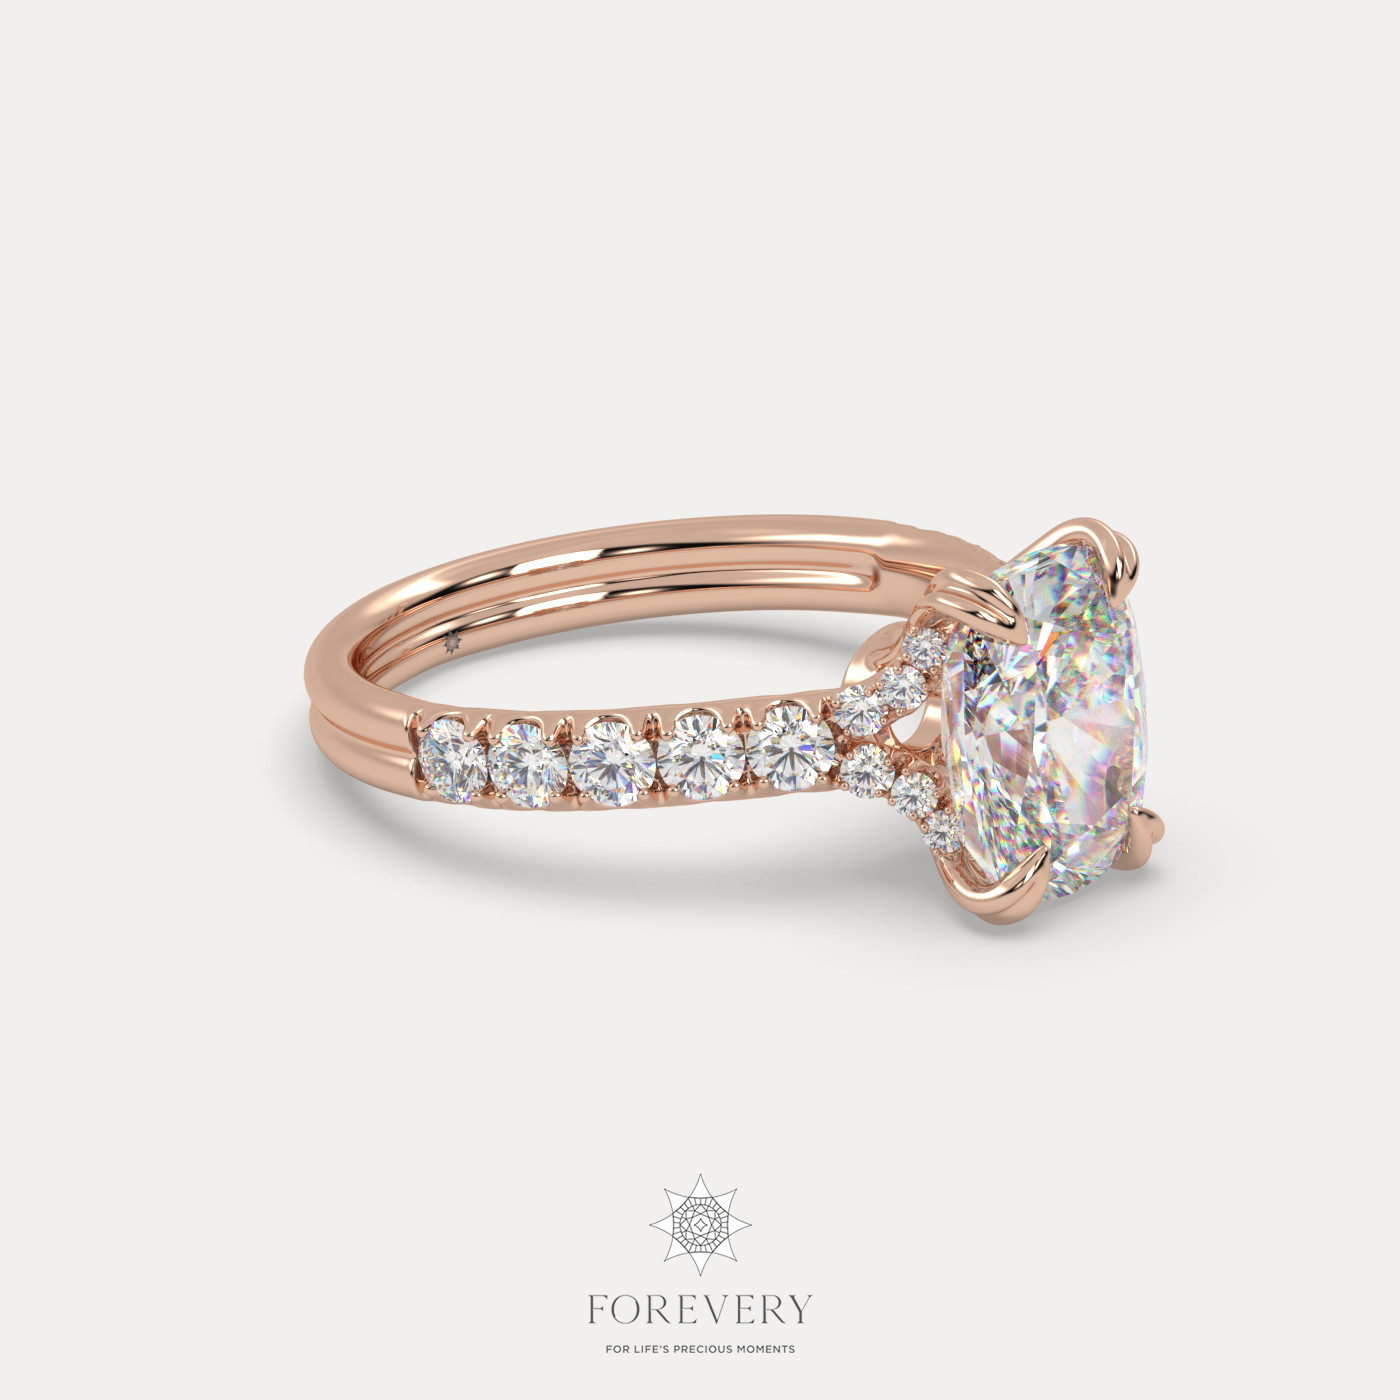 18K ROSE GOLD Cushion Cut Pave-Style Diamond Engagement Ring